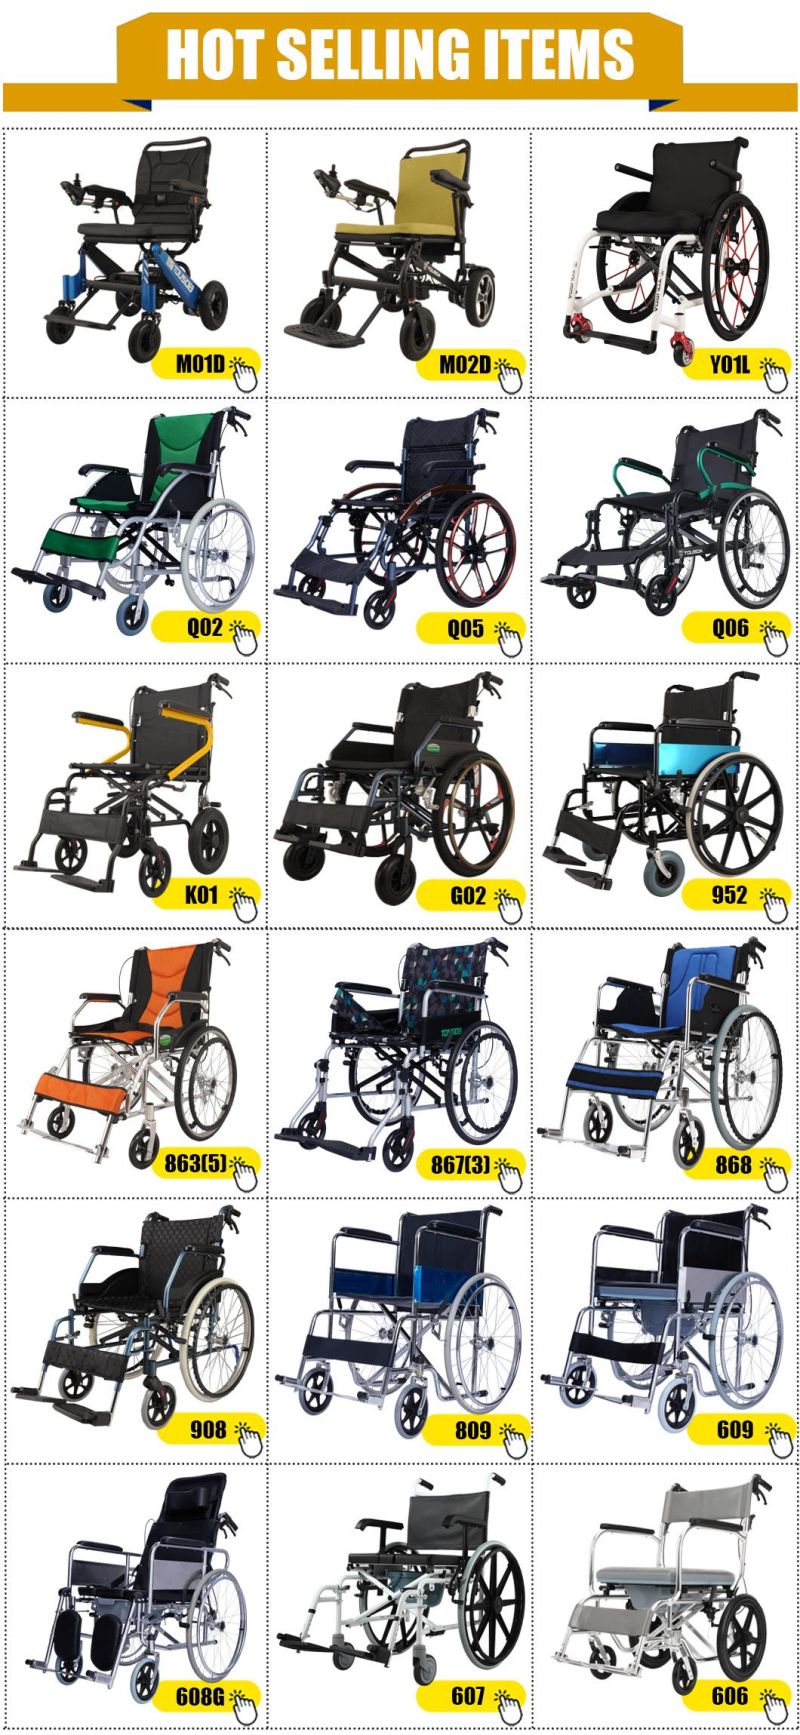 Aluminum Frame Mobility Folding Toilet/Shower/Beach/Hospital Disabled Power Wheelchair